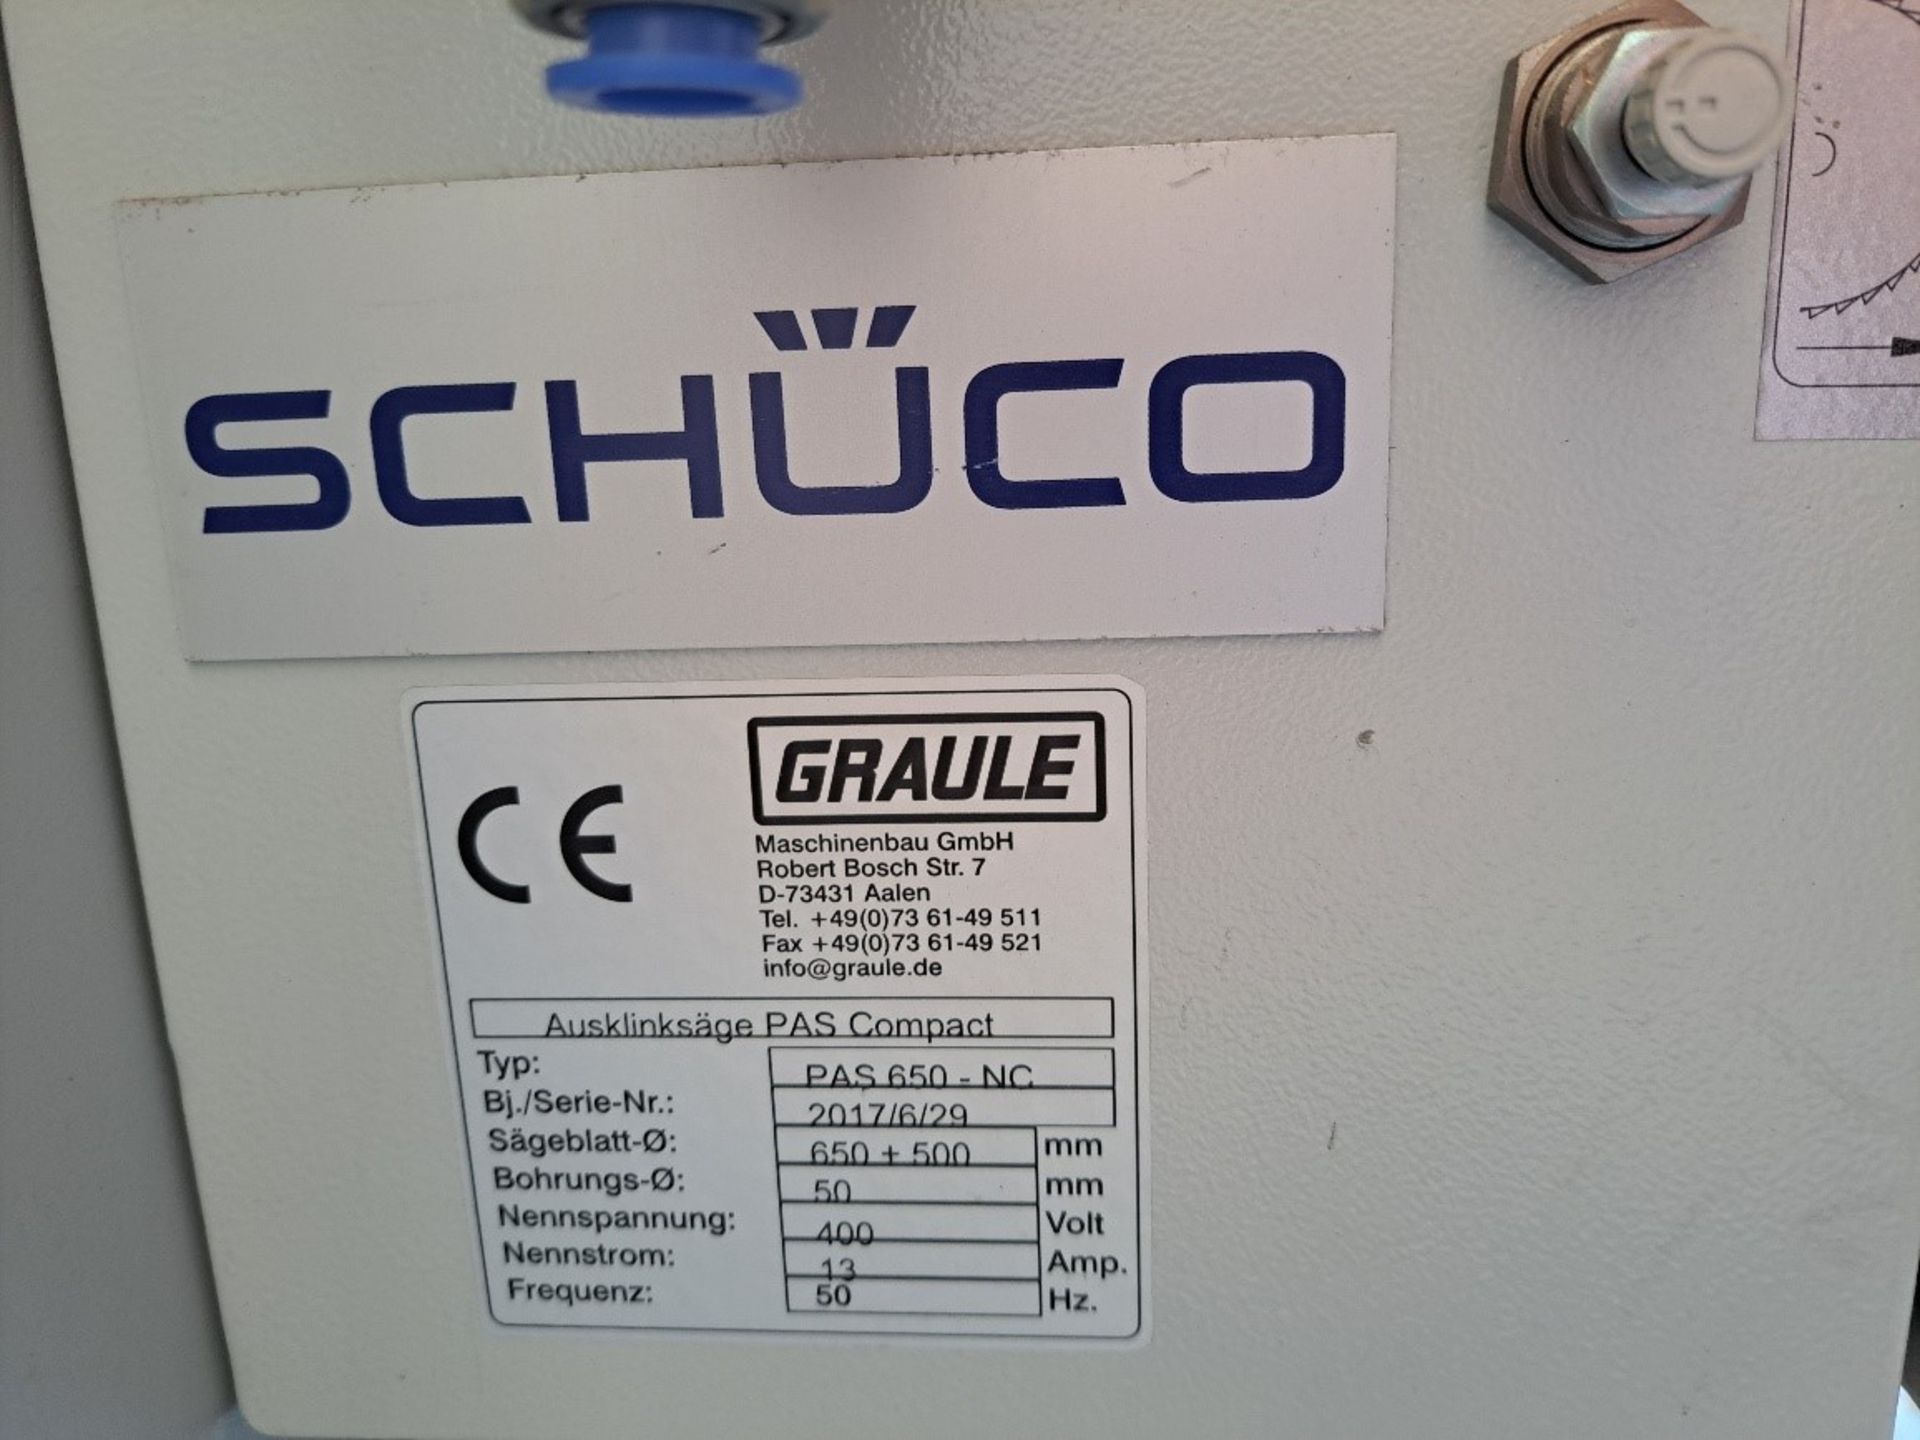 2017, Schuco PAS Compact 650 - Image 2 of 3